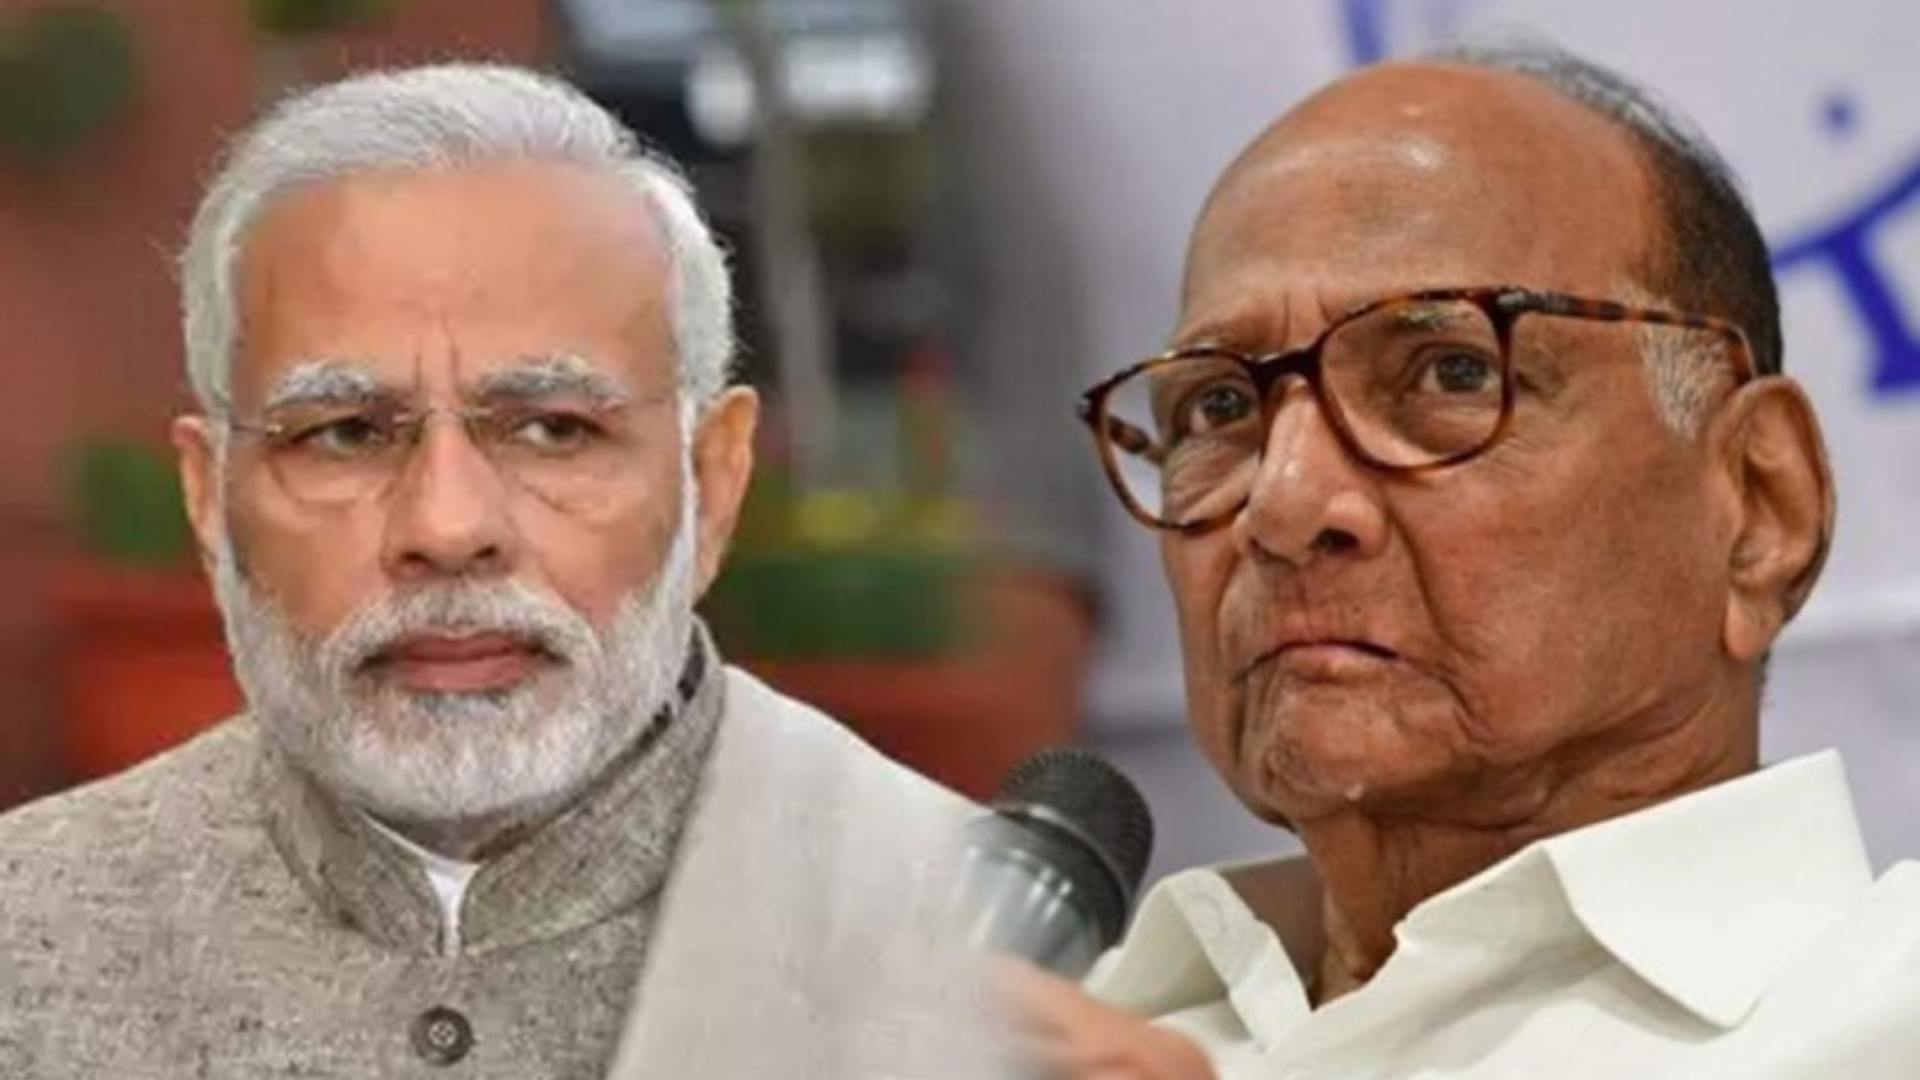 Sharad Pawar Criticizes PM Modi, calls him “Putin in the making”